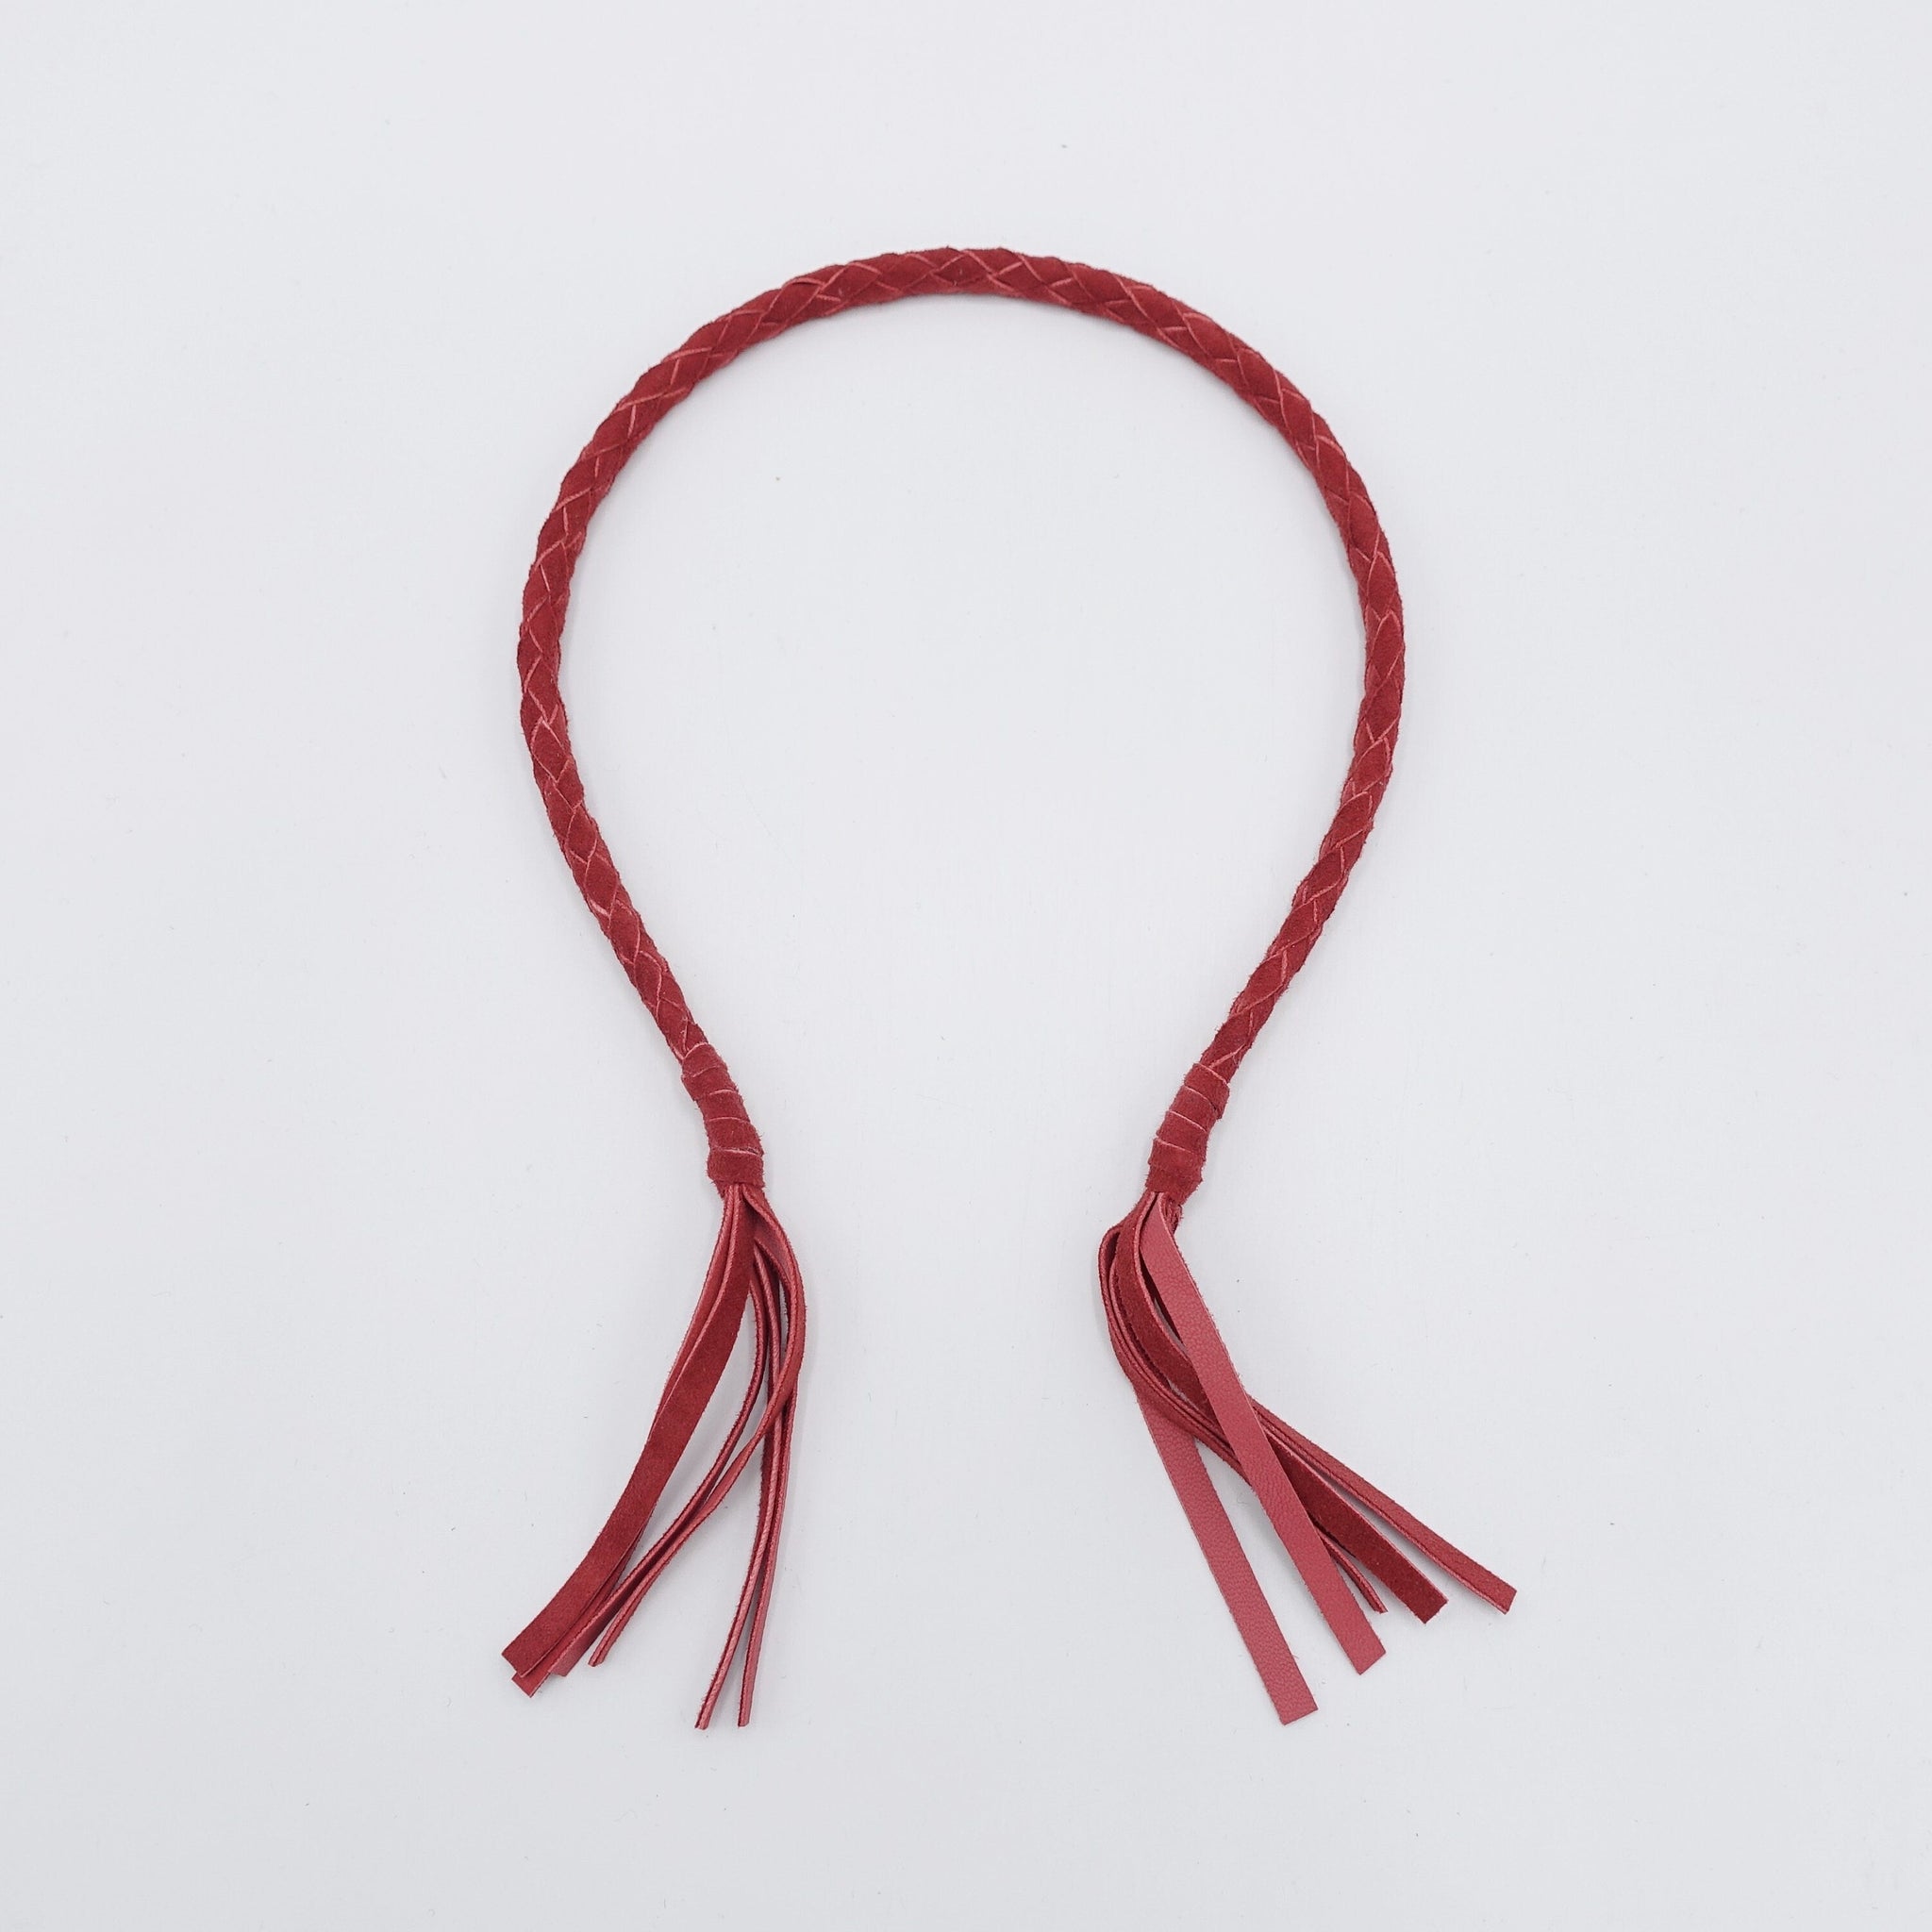 veryshine.com Headband Red brick suede headband, braided headband, tassel headband for women